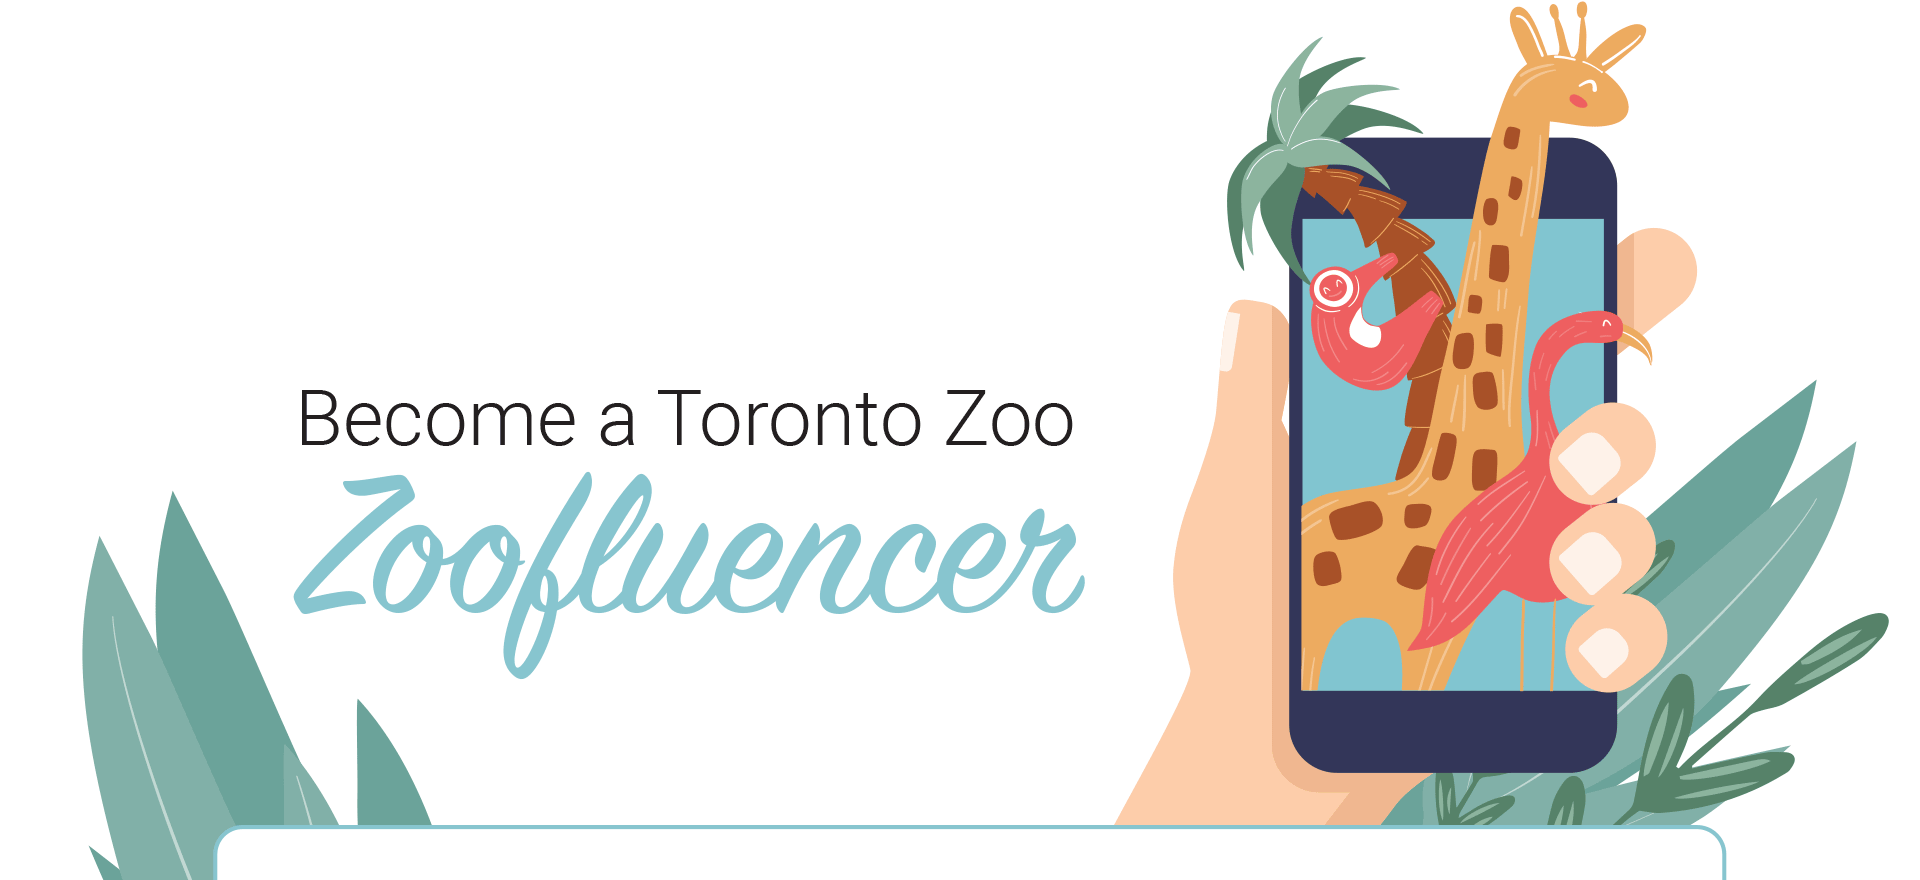 Become a Toronto Zoo Zoofluencer